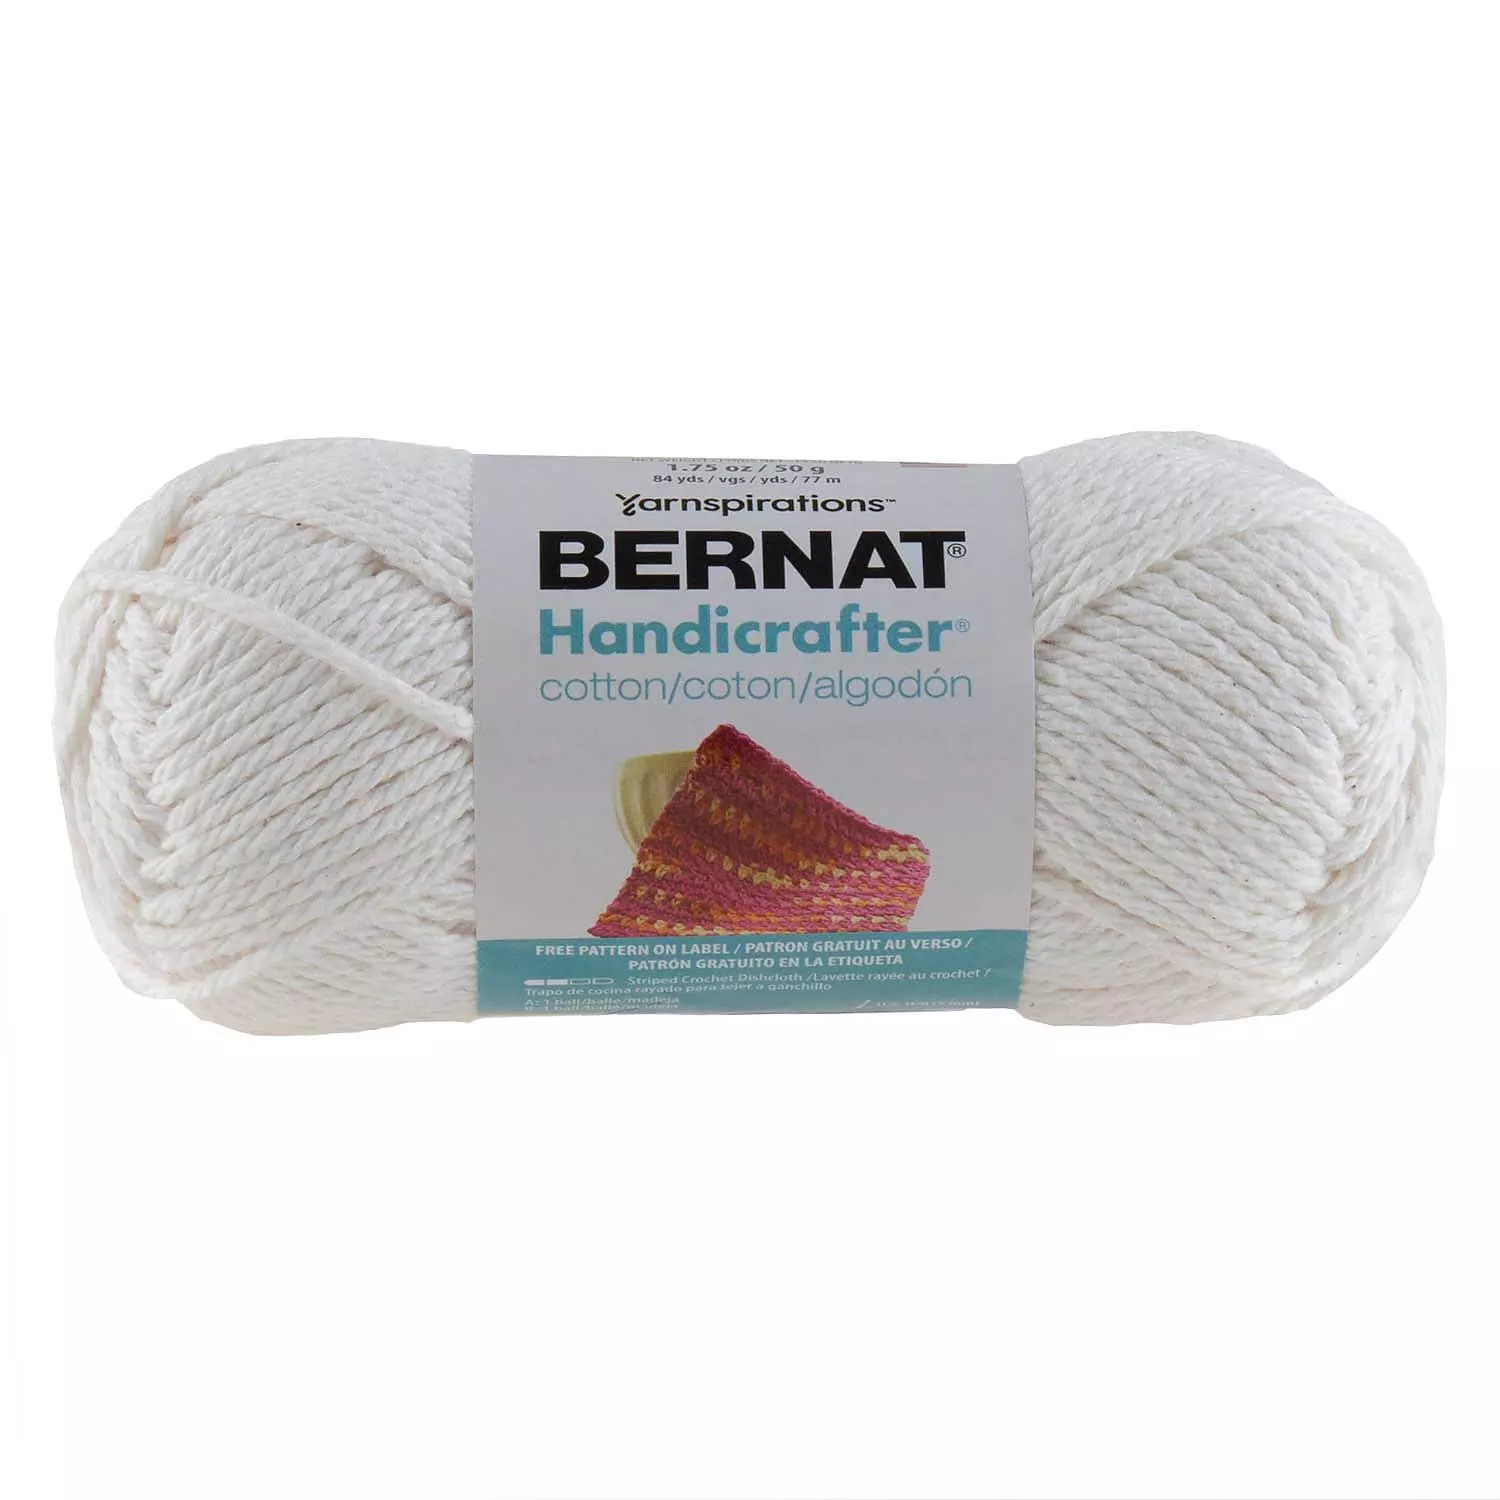 Bernat Handicrafter Cotton Off White Yarn - 6 Pack of 50g/1.75oz - Cotton -  4 Medium (Worsted) - 80 Yards - Knitting/Crochet , Off White